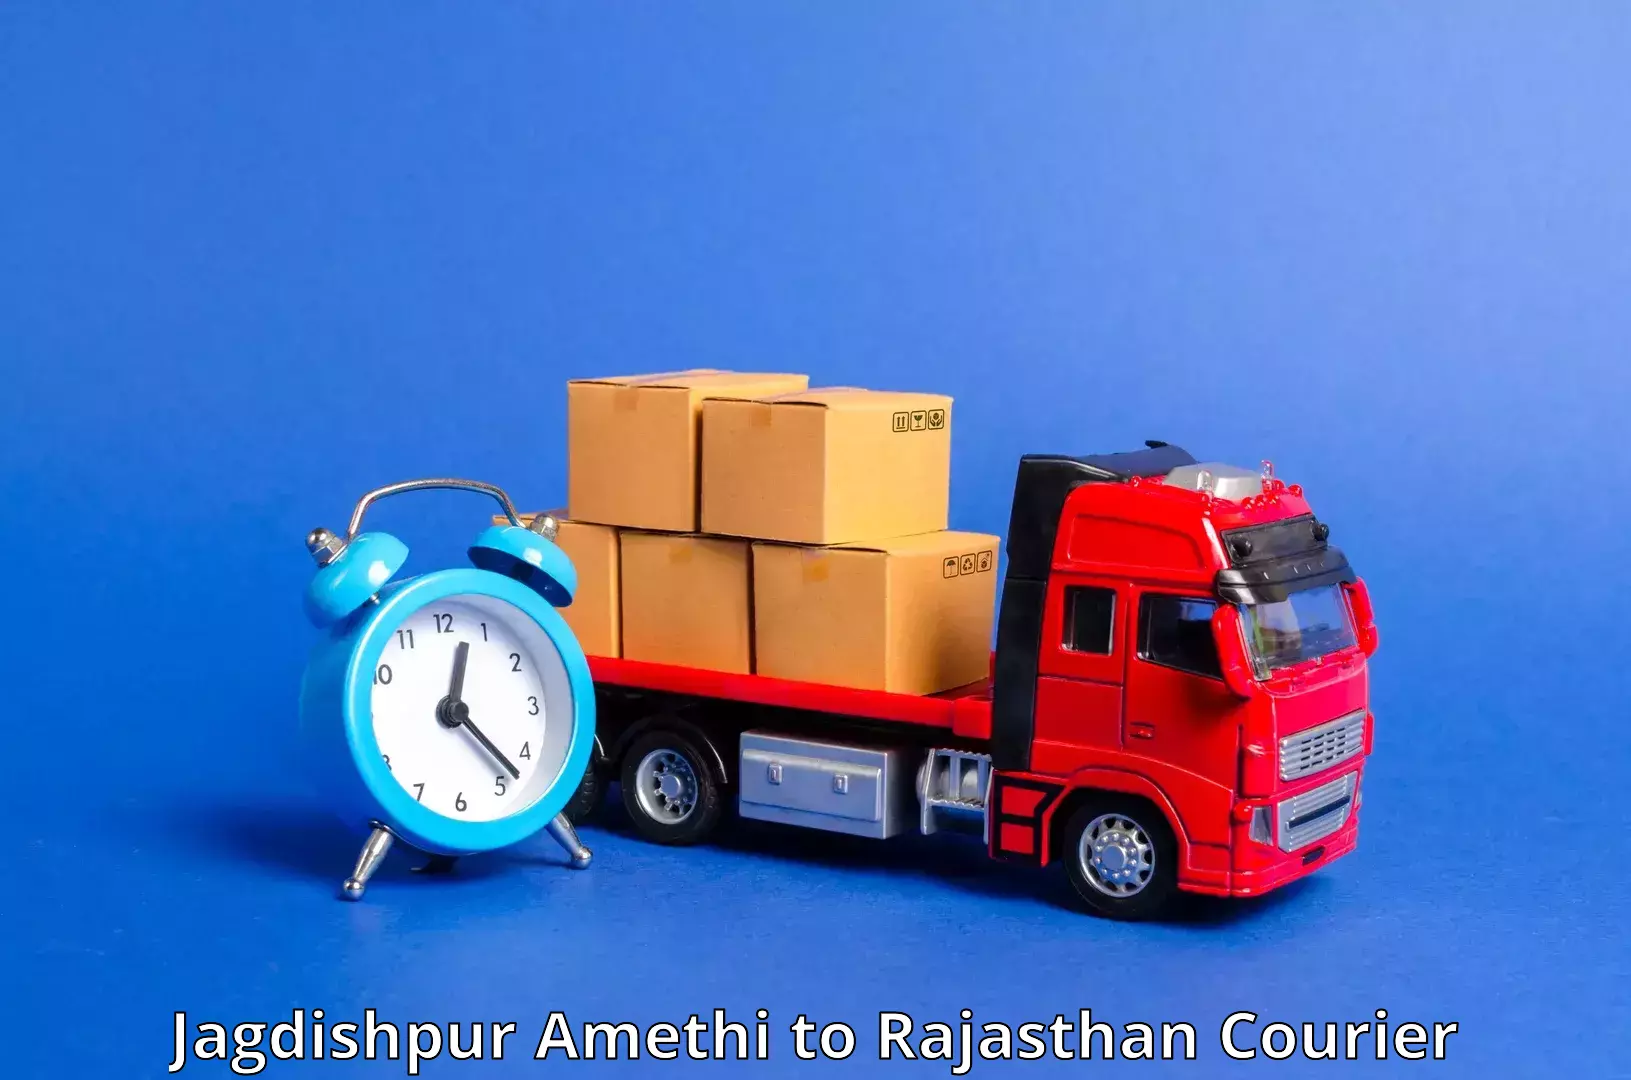 Courier service comparison Jagdishpur Amethi to Deshnok